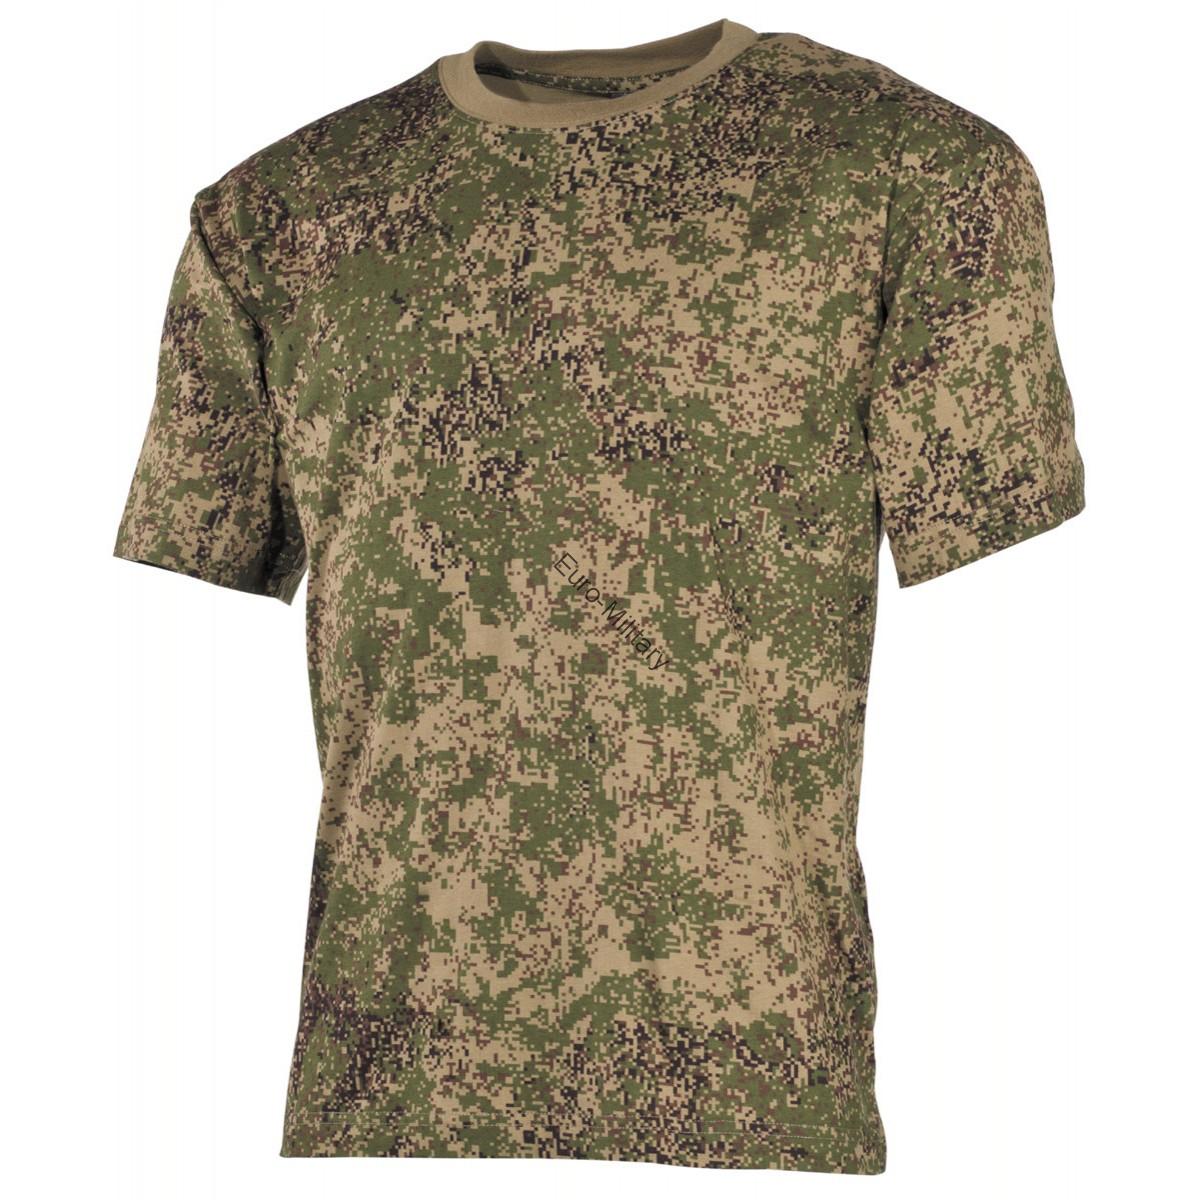 Russian Army Digital Camo T-Shirt - Short Sleeve